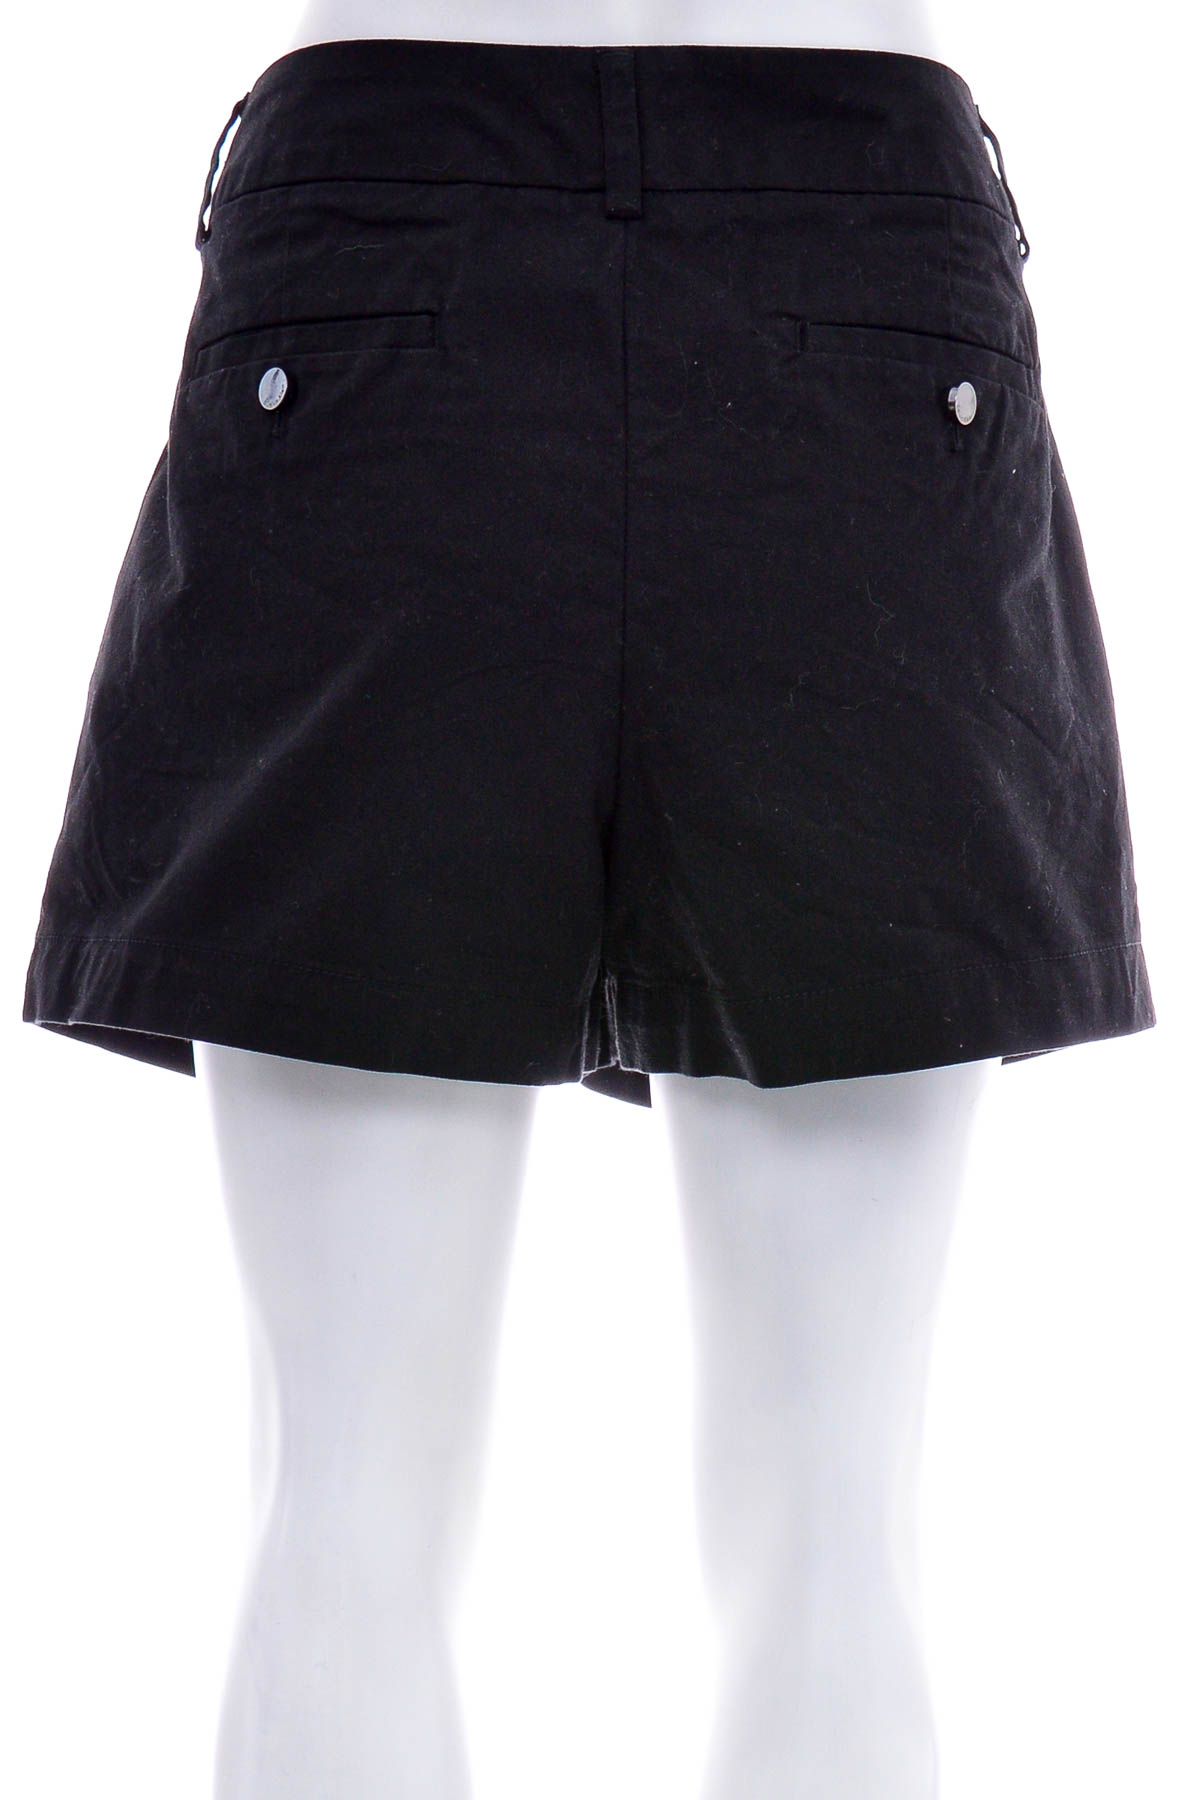 Female shorts - Calvin Klein - 1